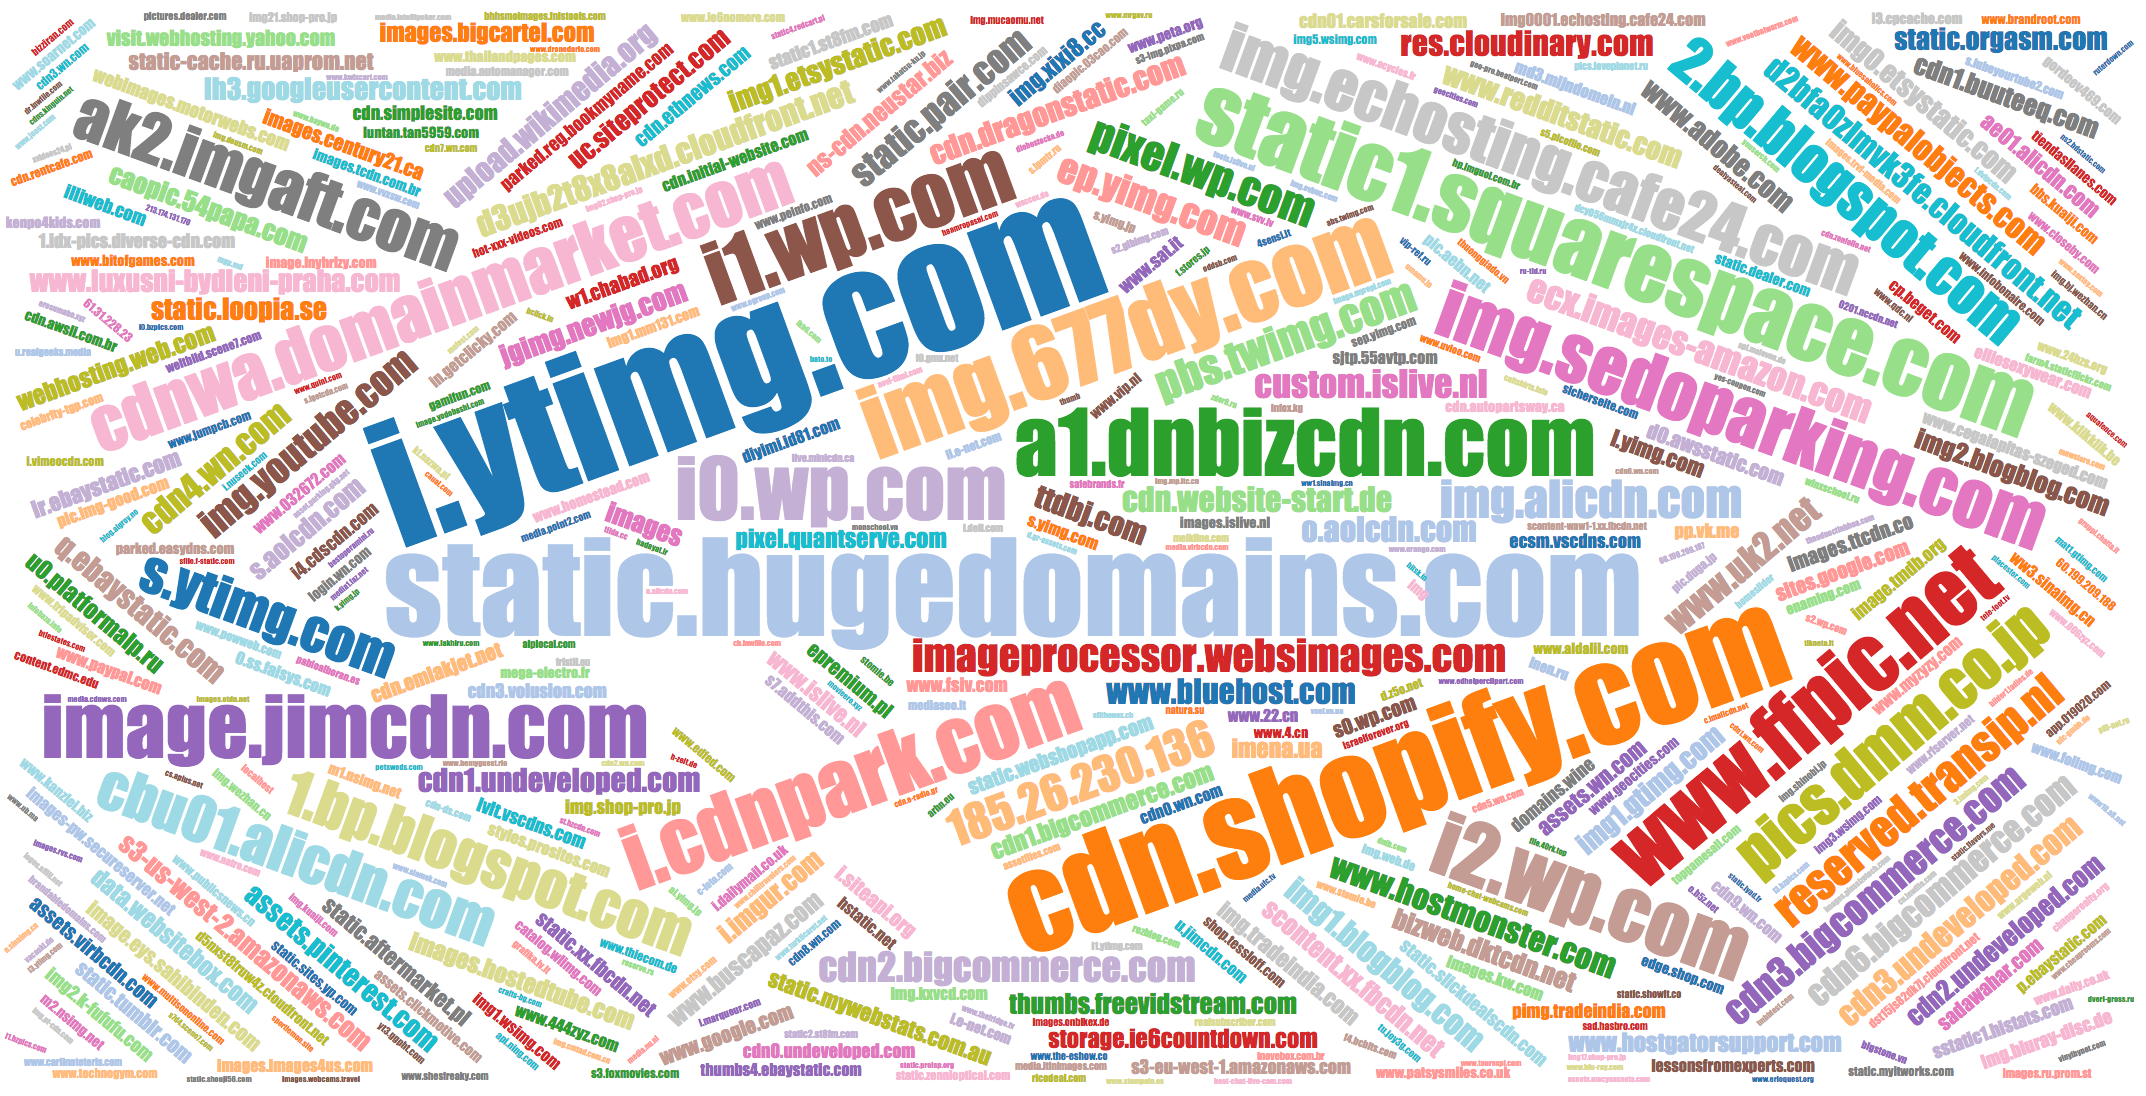 Popular names of IMG domains ttdbj.com, template, etc.